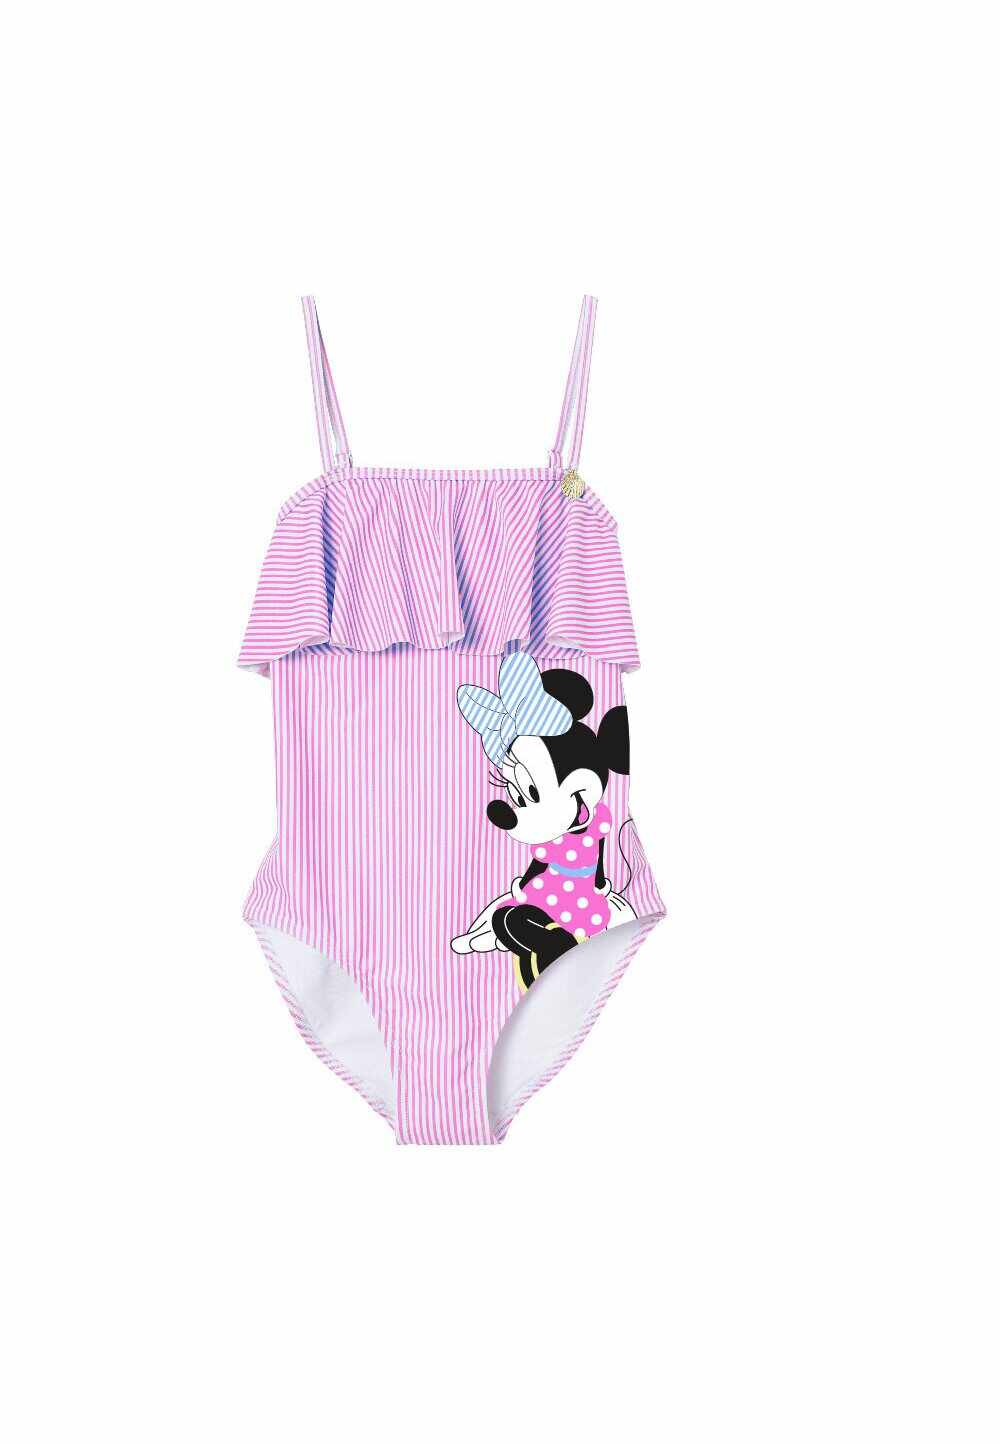 Costum de baie, intreg, Minnie Mouse Love, roz cu dungi